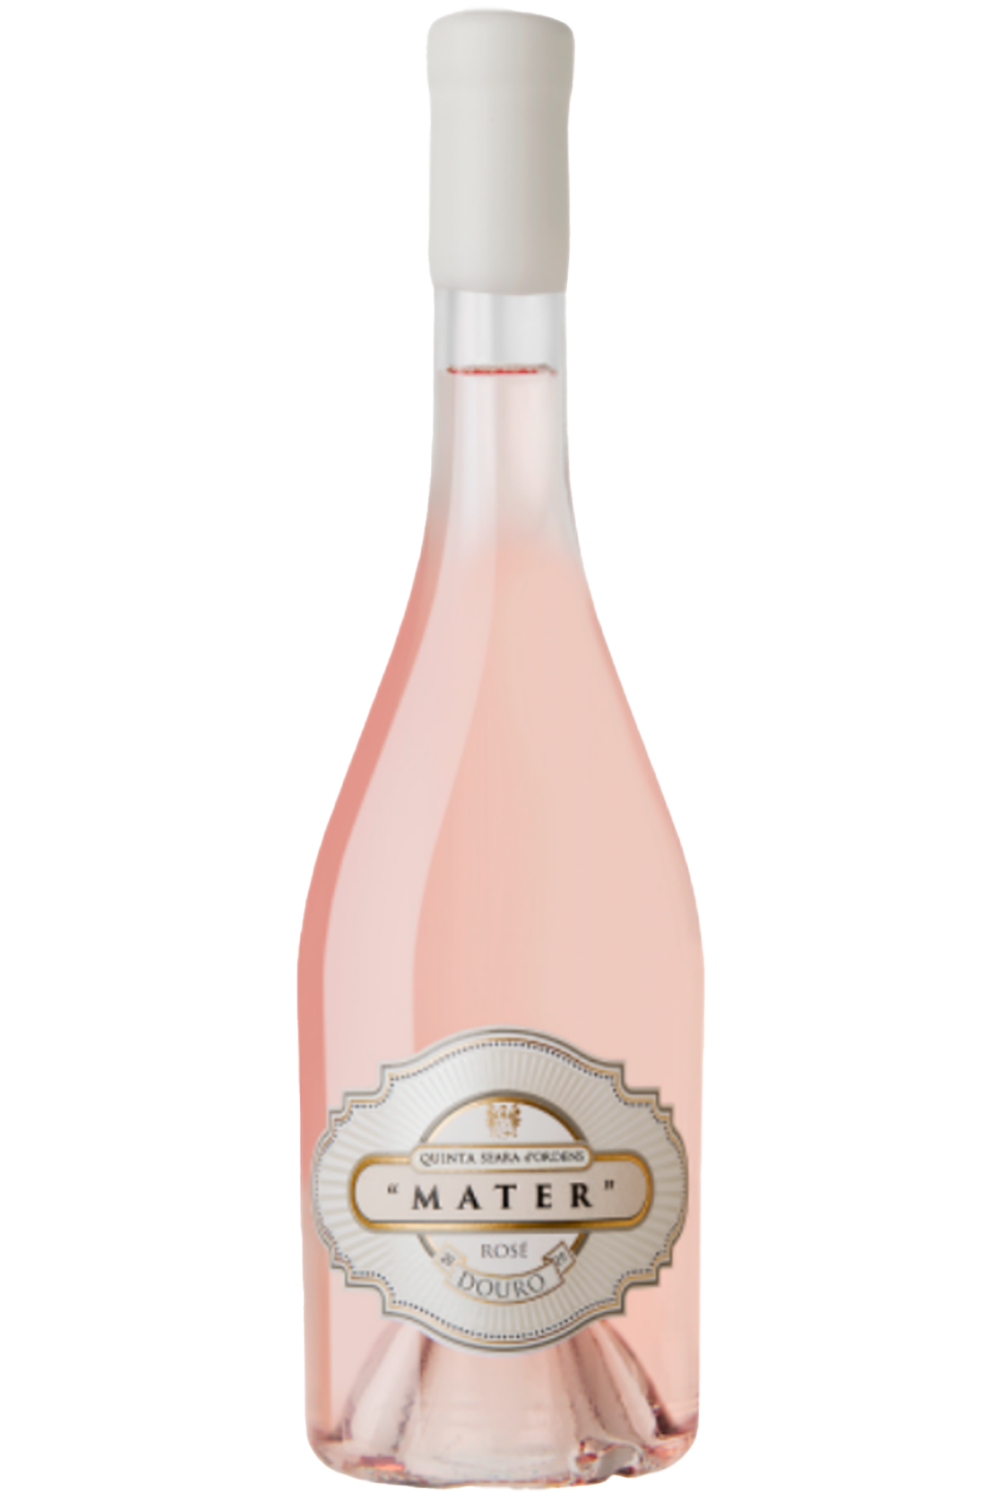 WineVins Seara d'Ordens Rosé Matter 2022